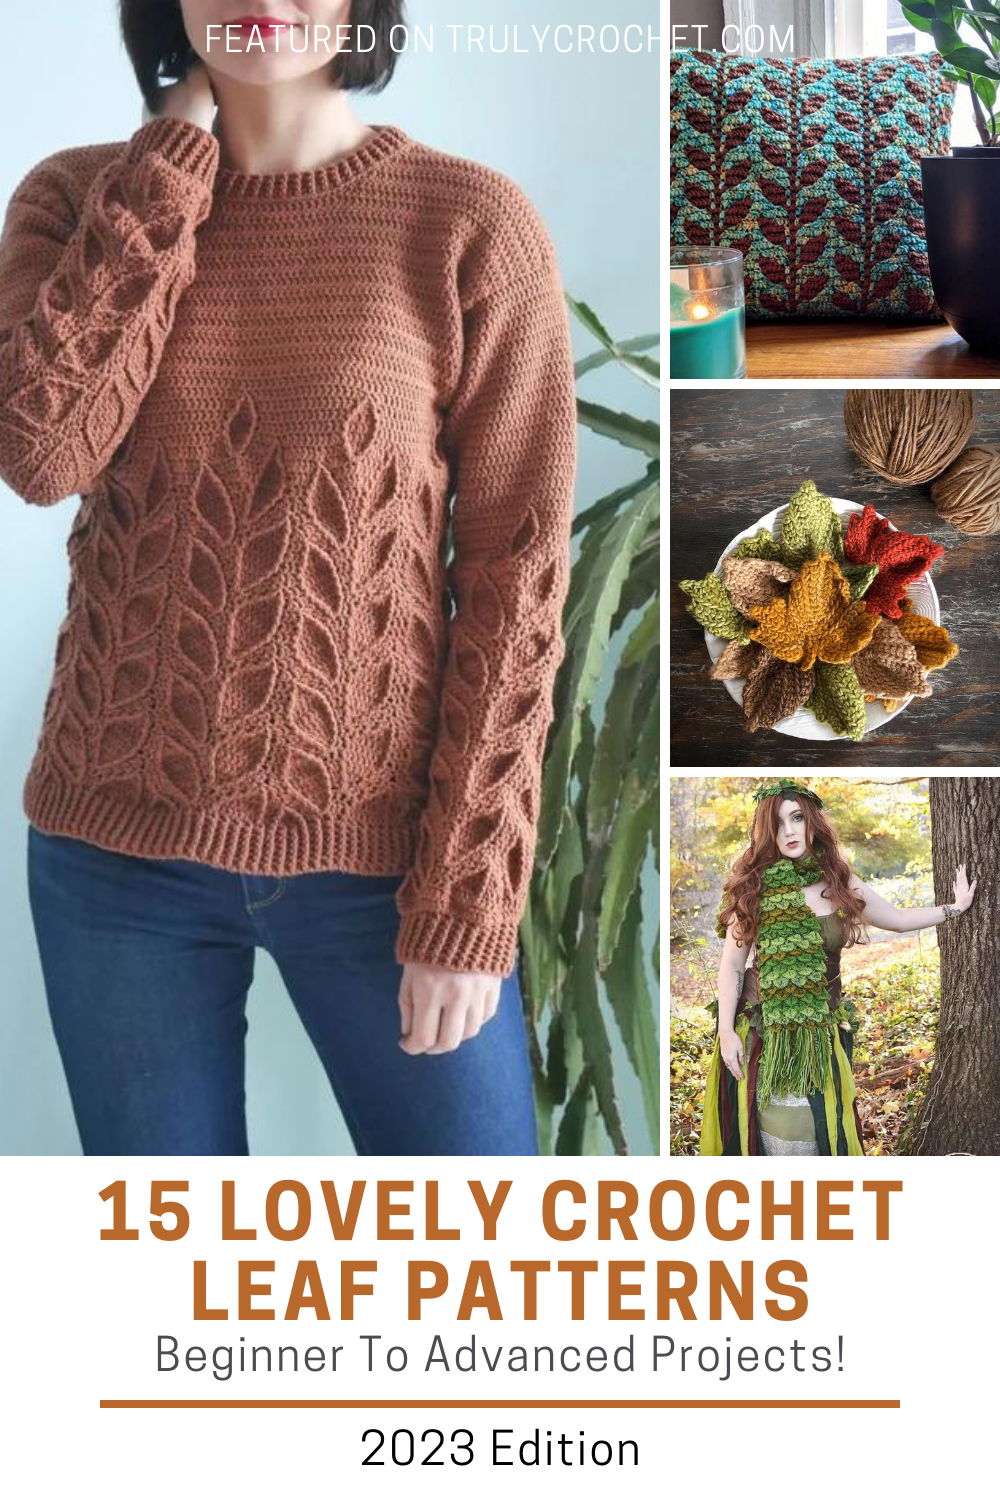 15 Lovely Crochet Leaf Patterns - 2023 Edition